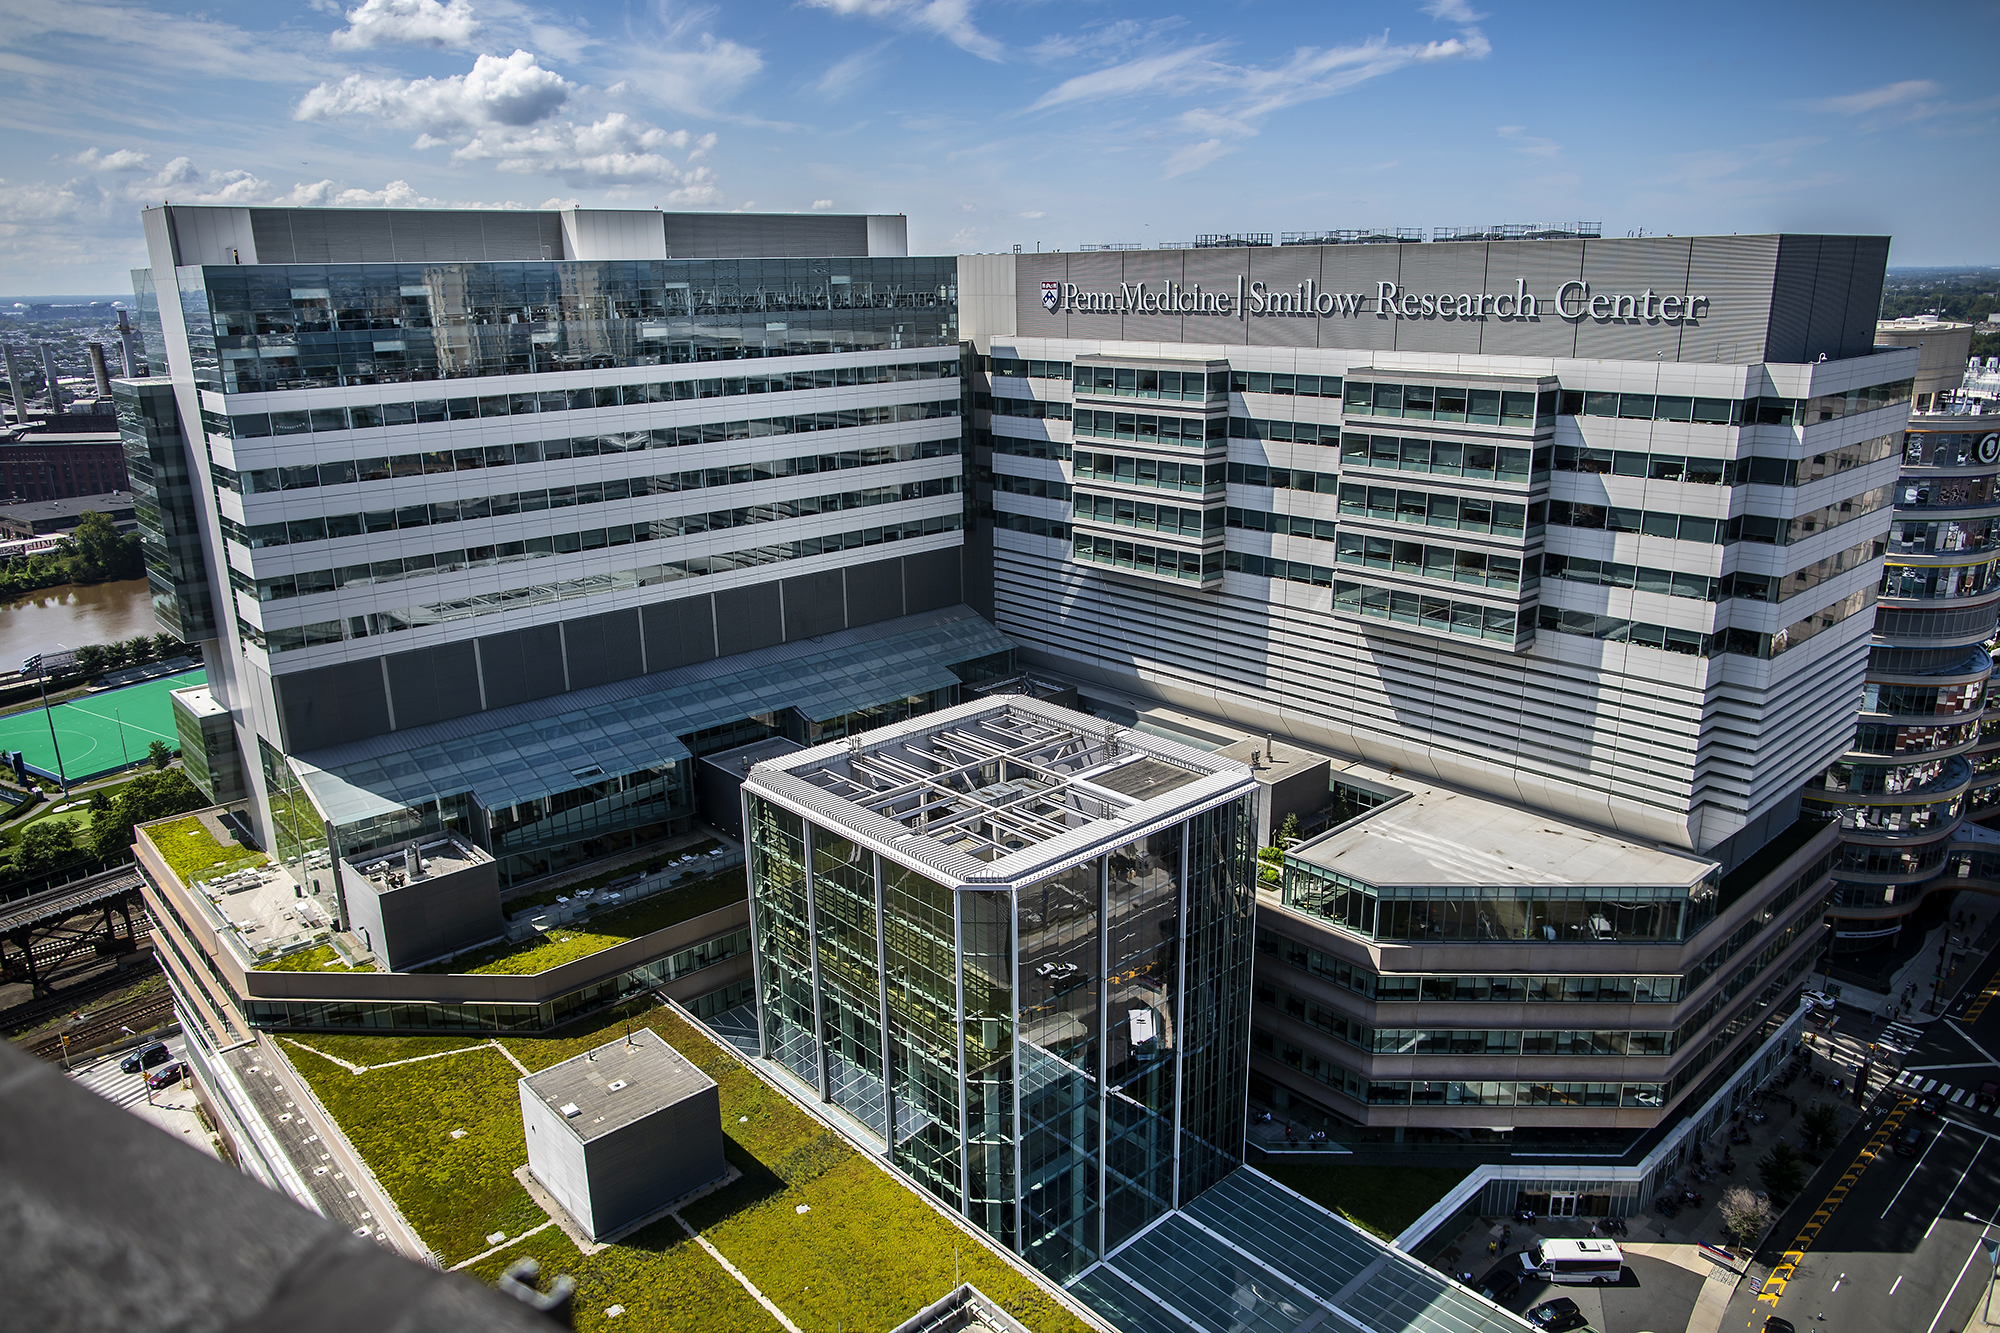 Aerial view of the Perelman Center for Advanced Medicine